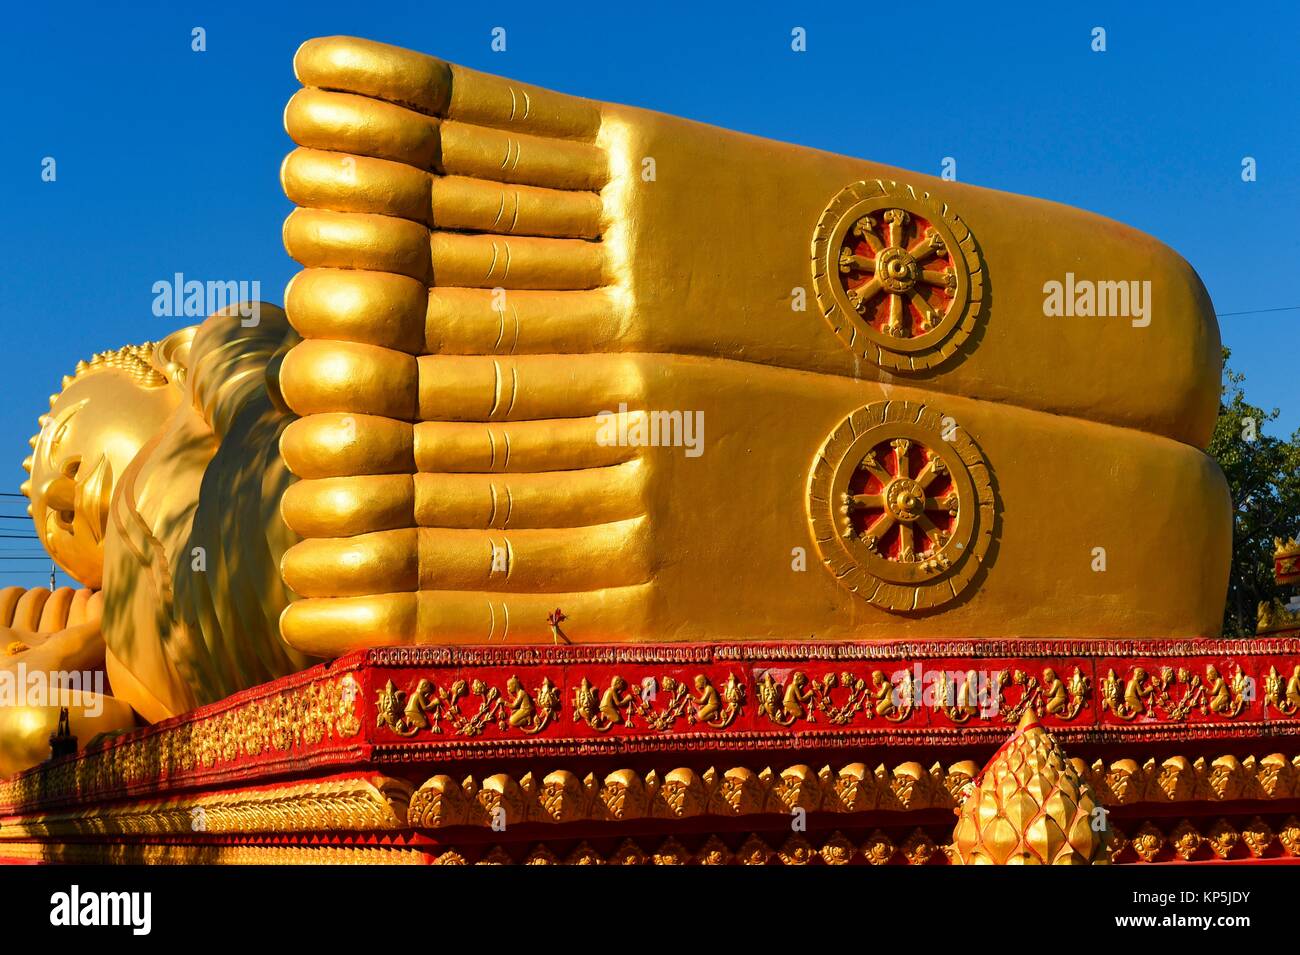 Giant gold reclining sleeping Buddha statue near Wat That Luang temple,Vientiane,Laos,Southeast Asia. Stock Photo